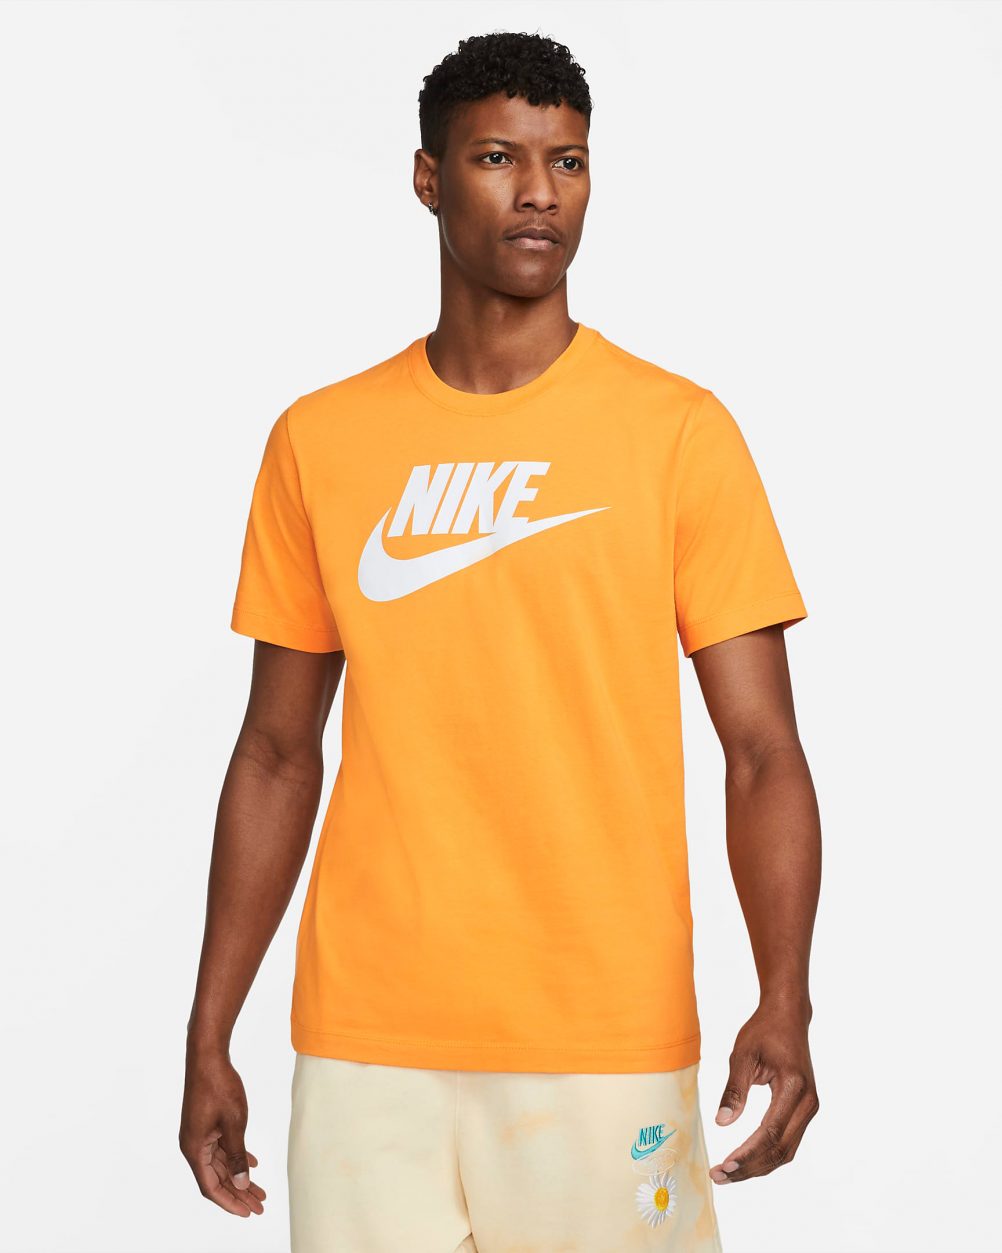 Nike Air Max Plus White Kumquat Marina Shirts Clothing Outfits